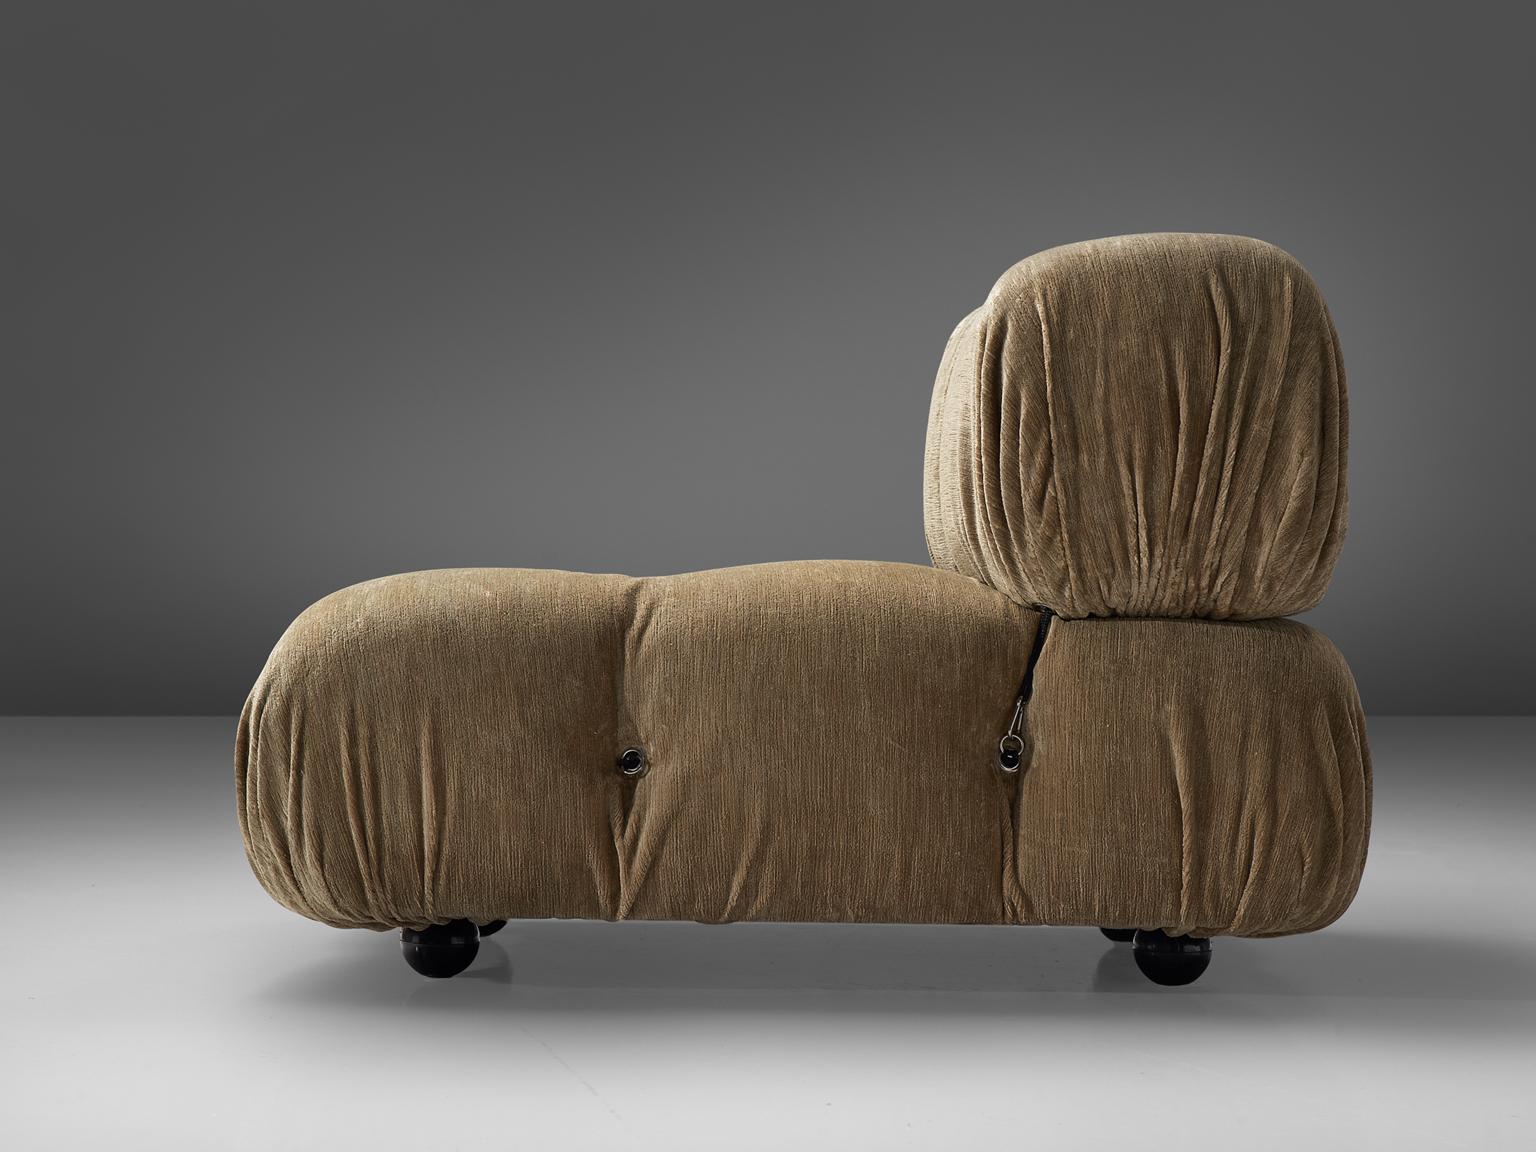 Fabric Mario Bellini Reupholstered 'Camaleonda' Modular Sofa in Beige Pierre Frey